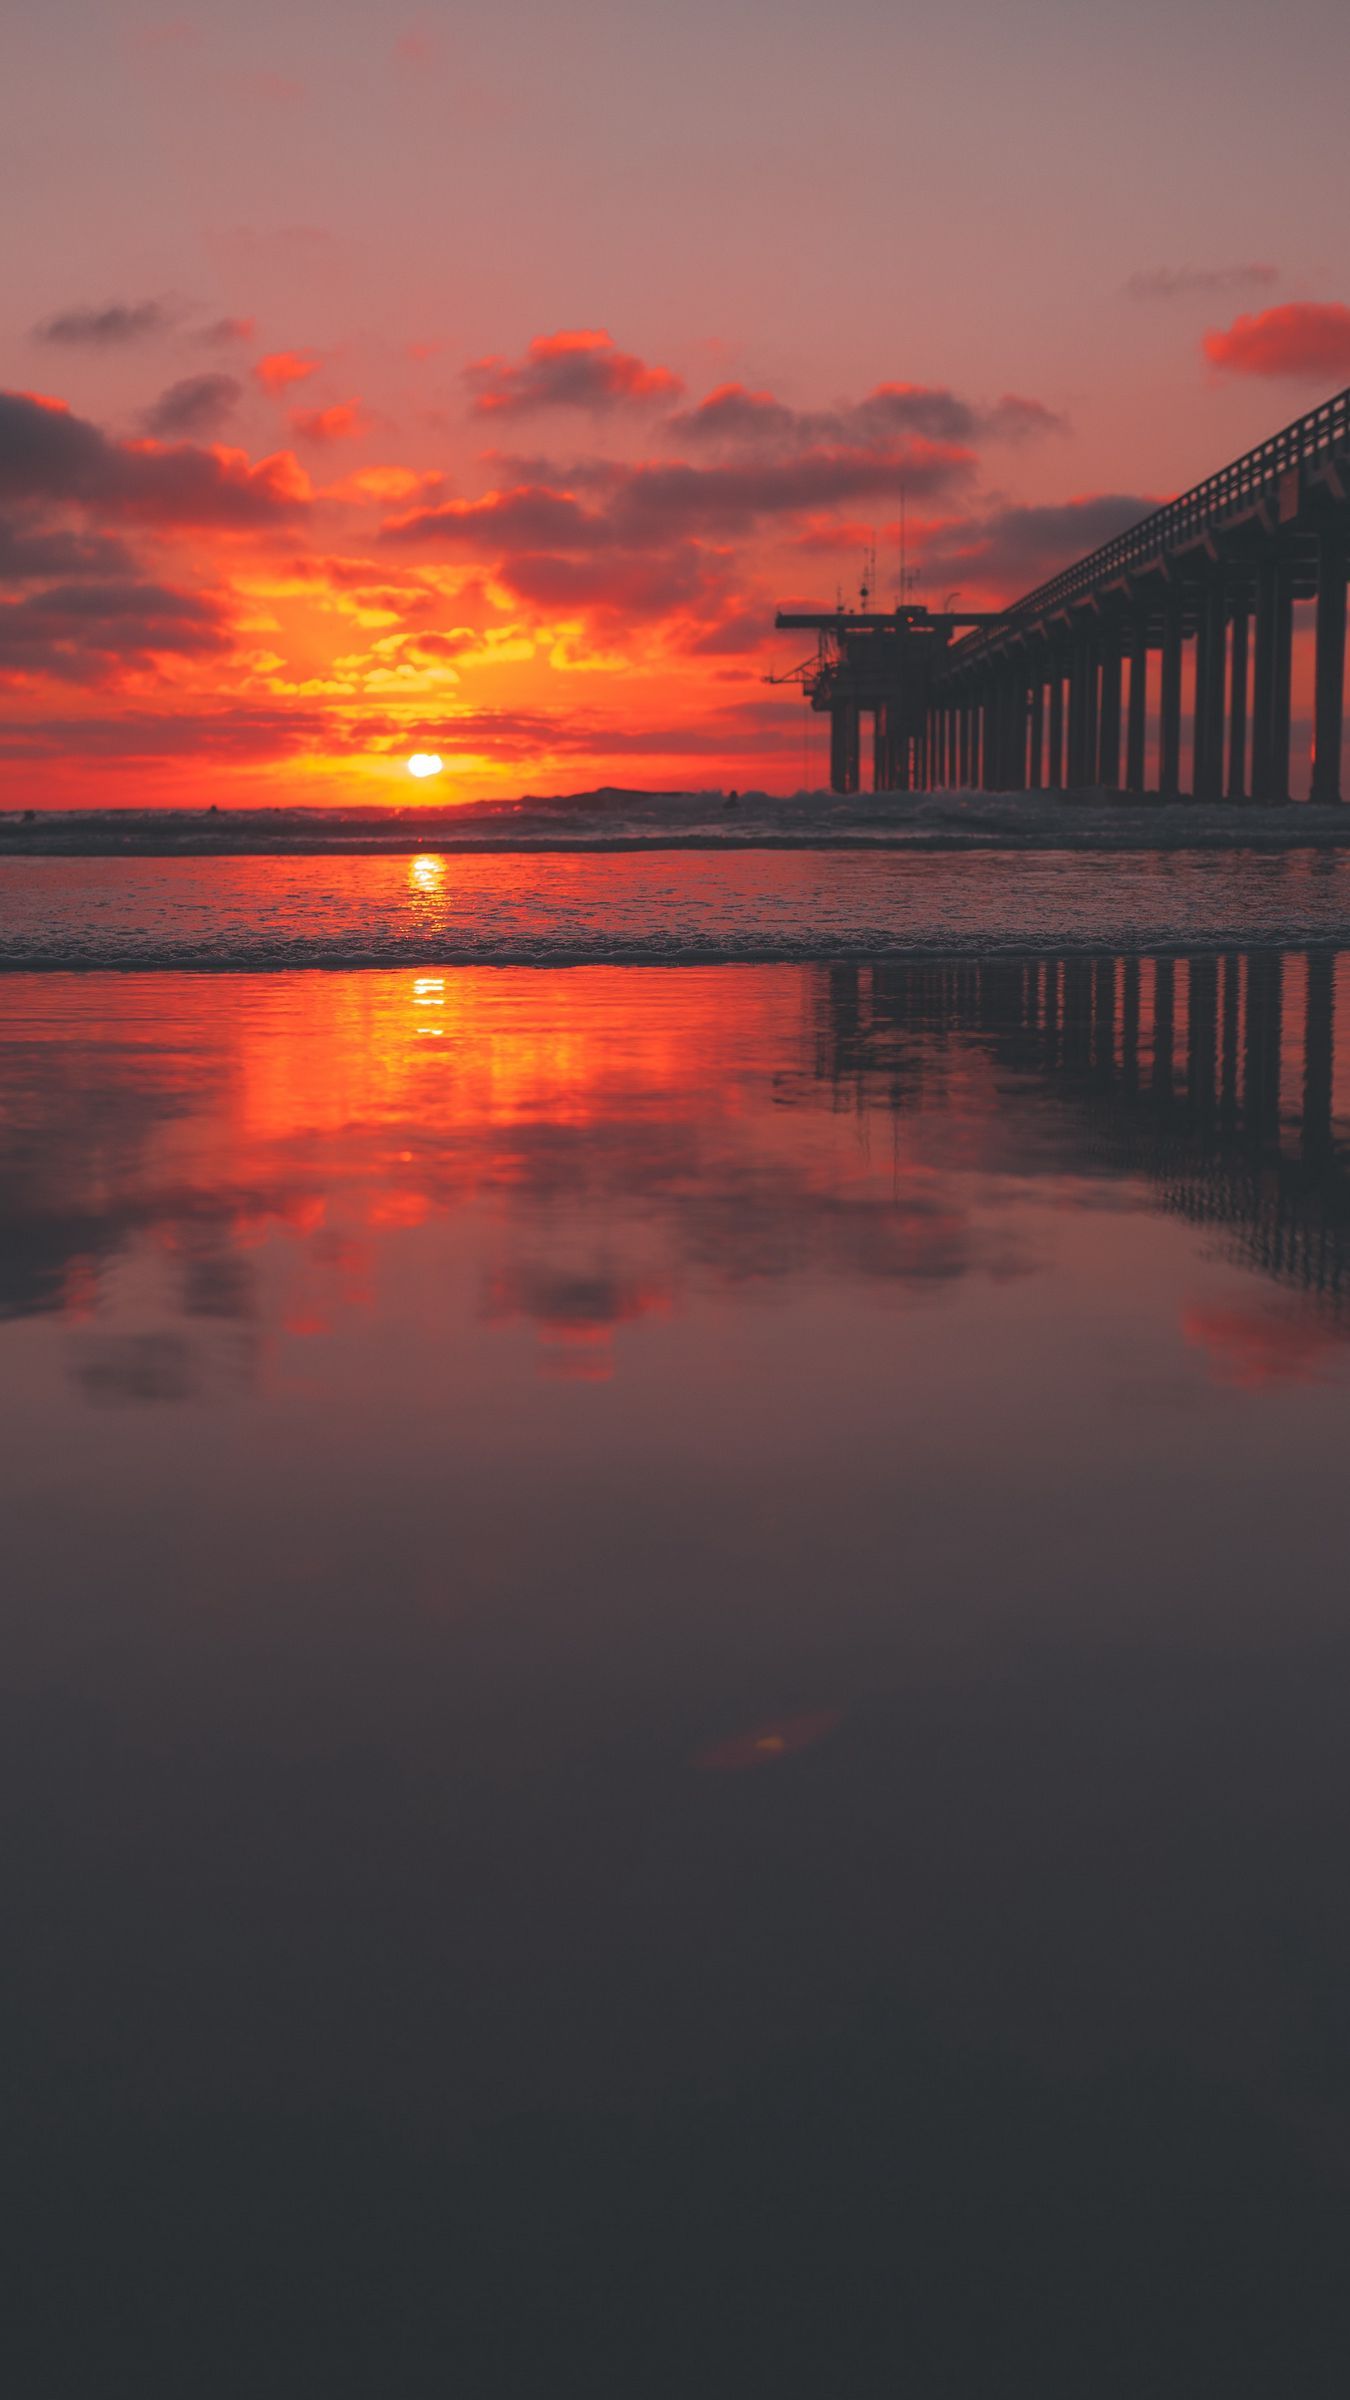 Download wallpaper 1350x2400 sea, pier, sunset, sky iphone 8+